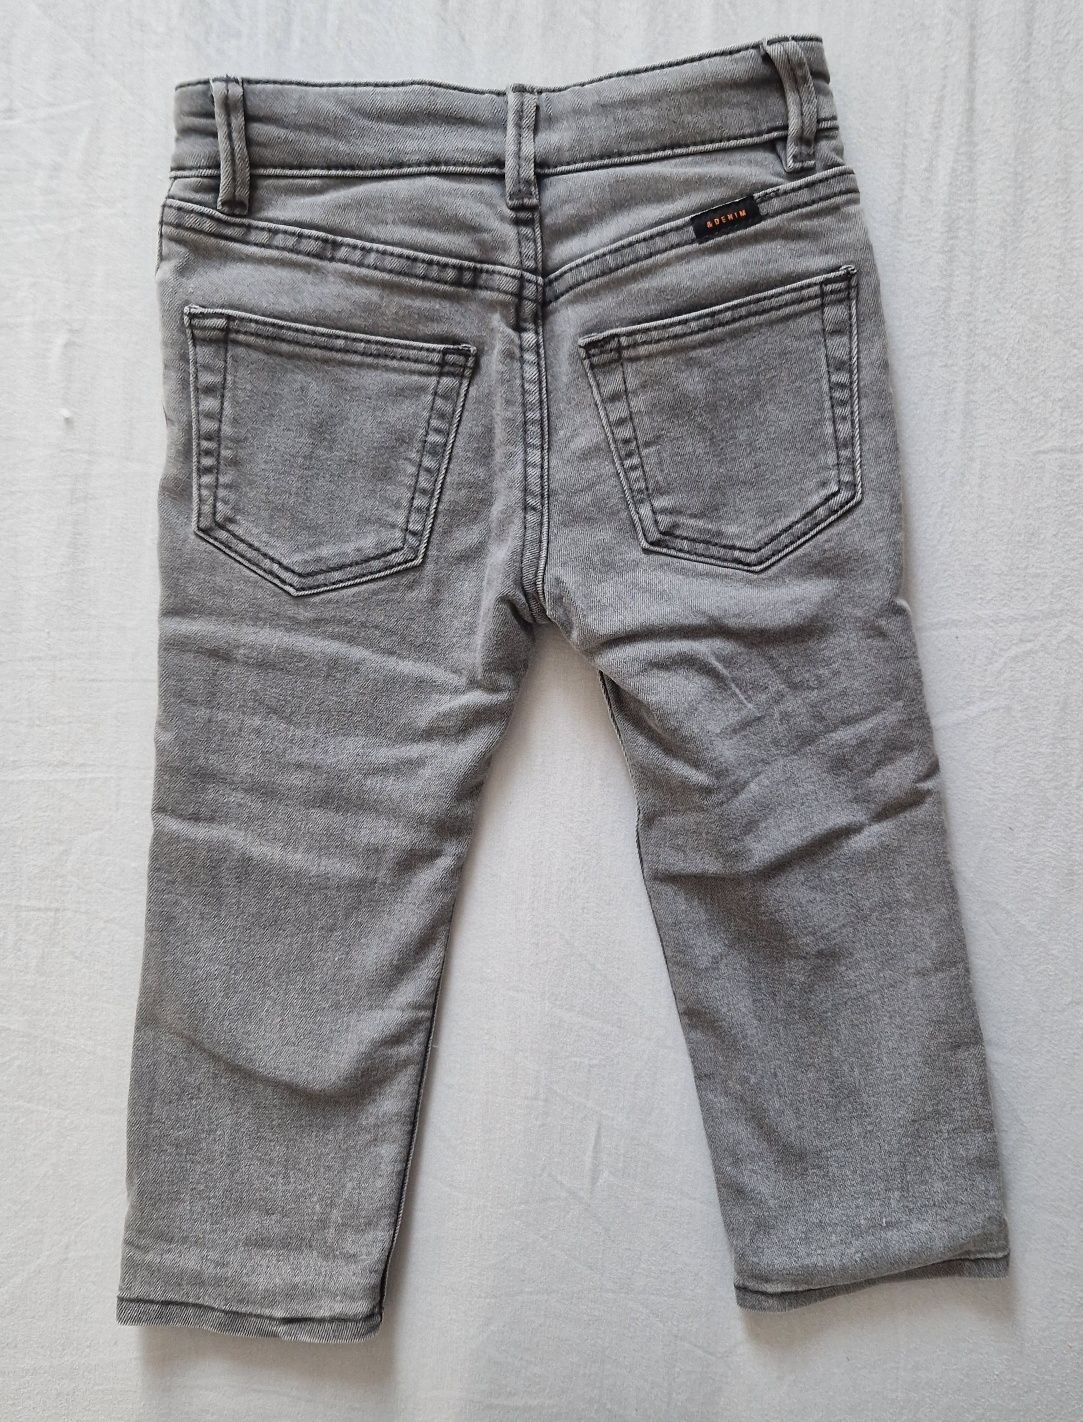 Blugi/ Jeans gri cu dublura, mas 92, H&M, gri, model skinny, NOI